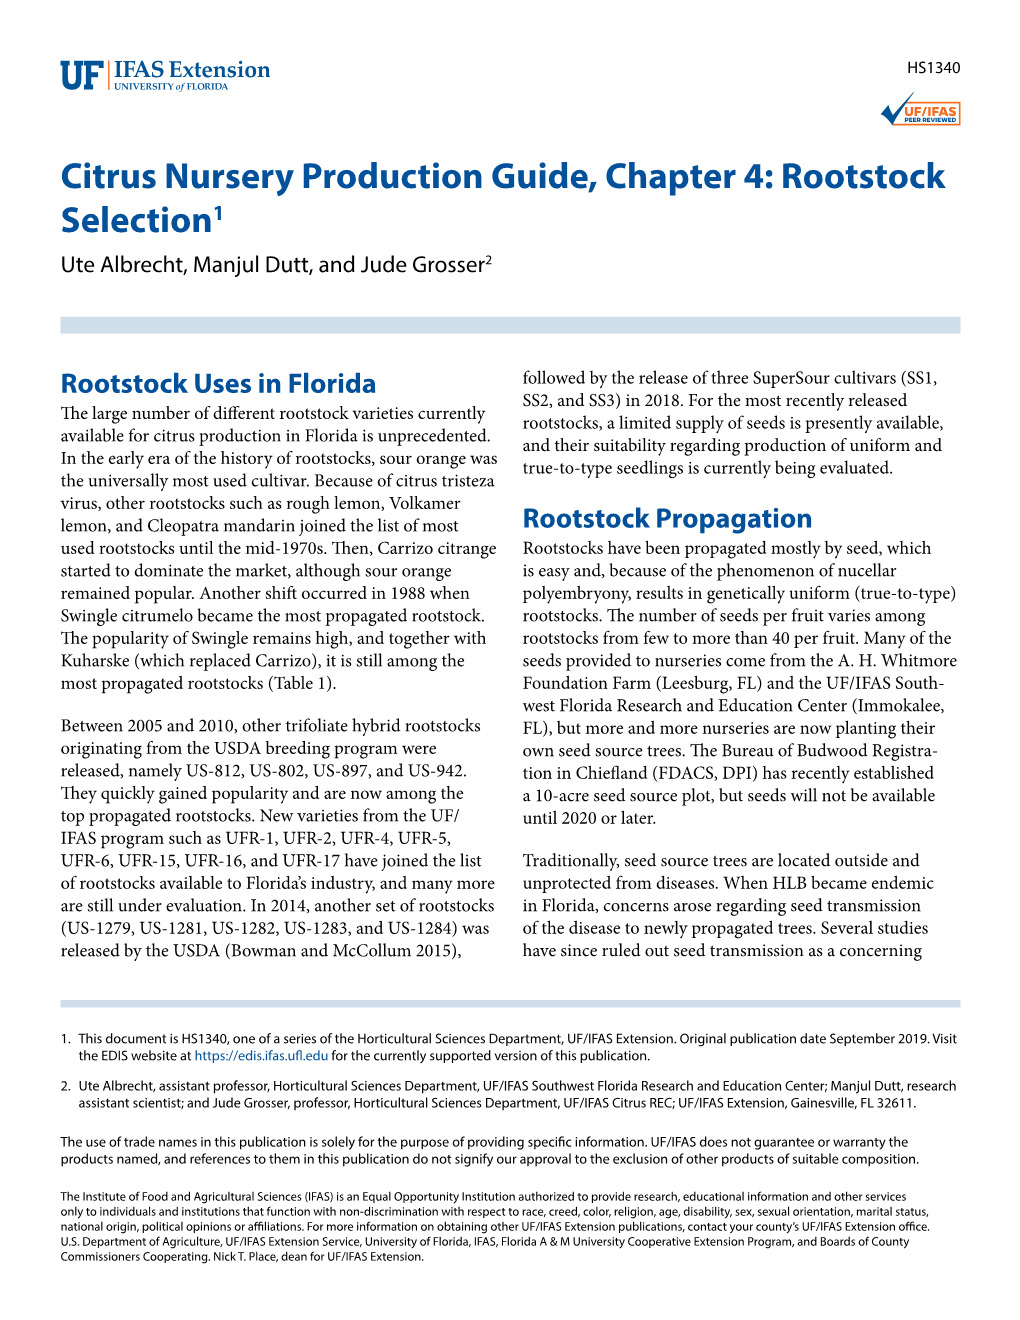 Citrus Nursery Production Guide, Chapter 4: Rootstock Selection1 Ute Albrecht, Manjul Dutt, and Jude Grosser2